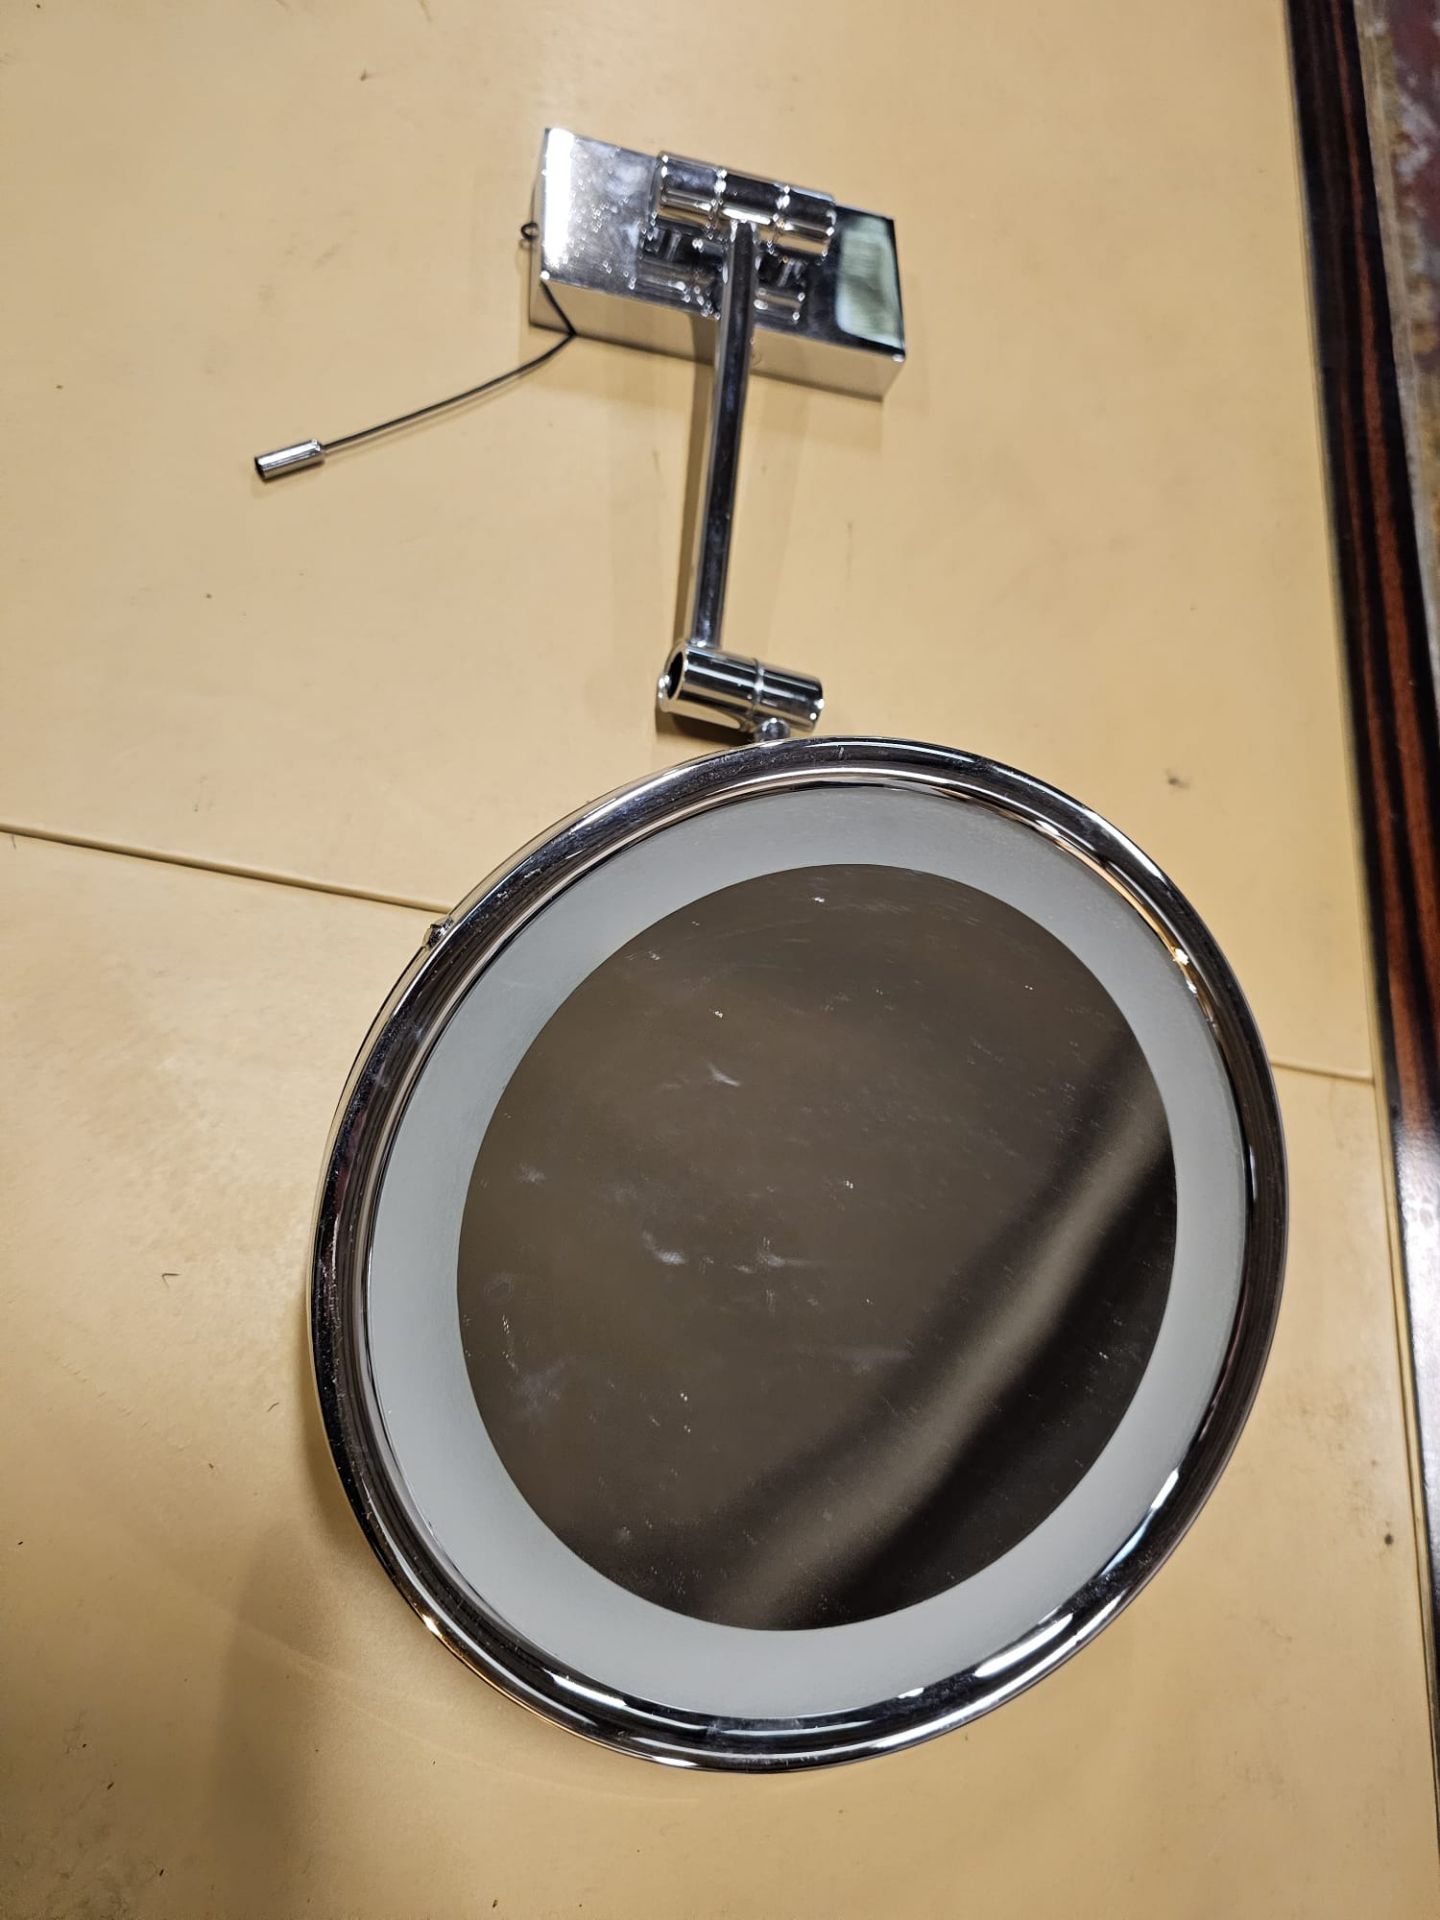 LED Illuminated Magnifying Vanity Mirror For Bathroom Round Ingress Protection Rating IP44